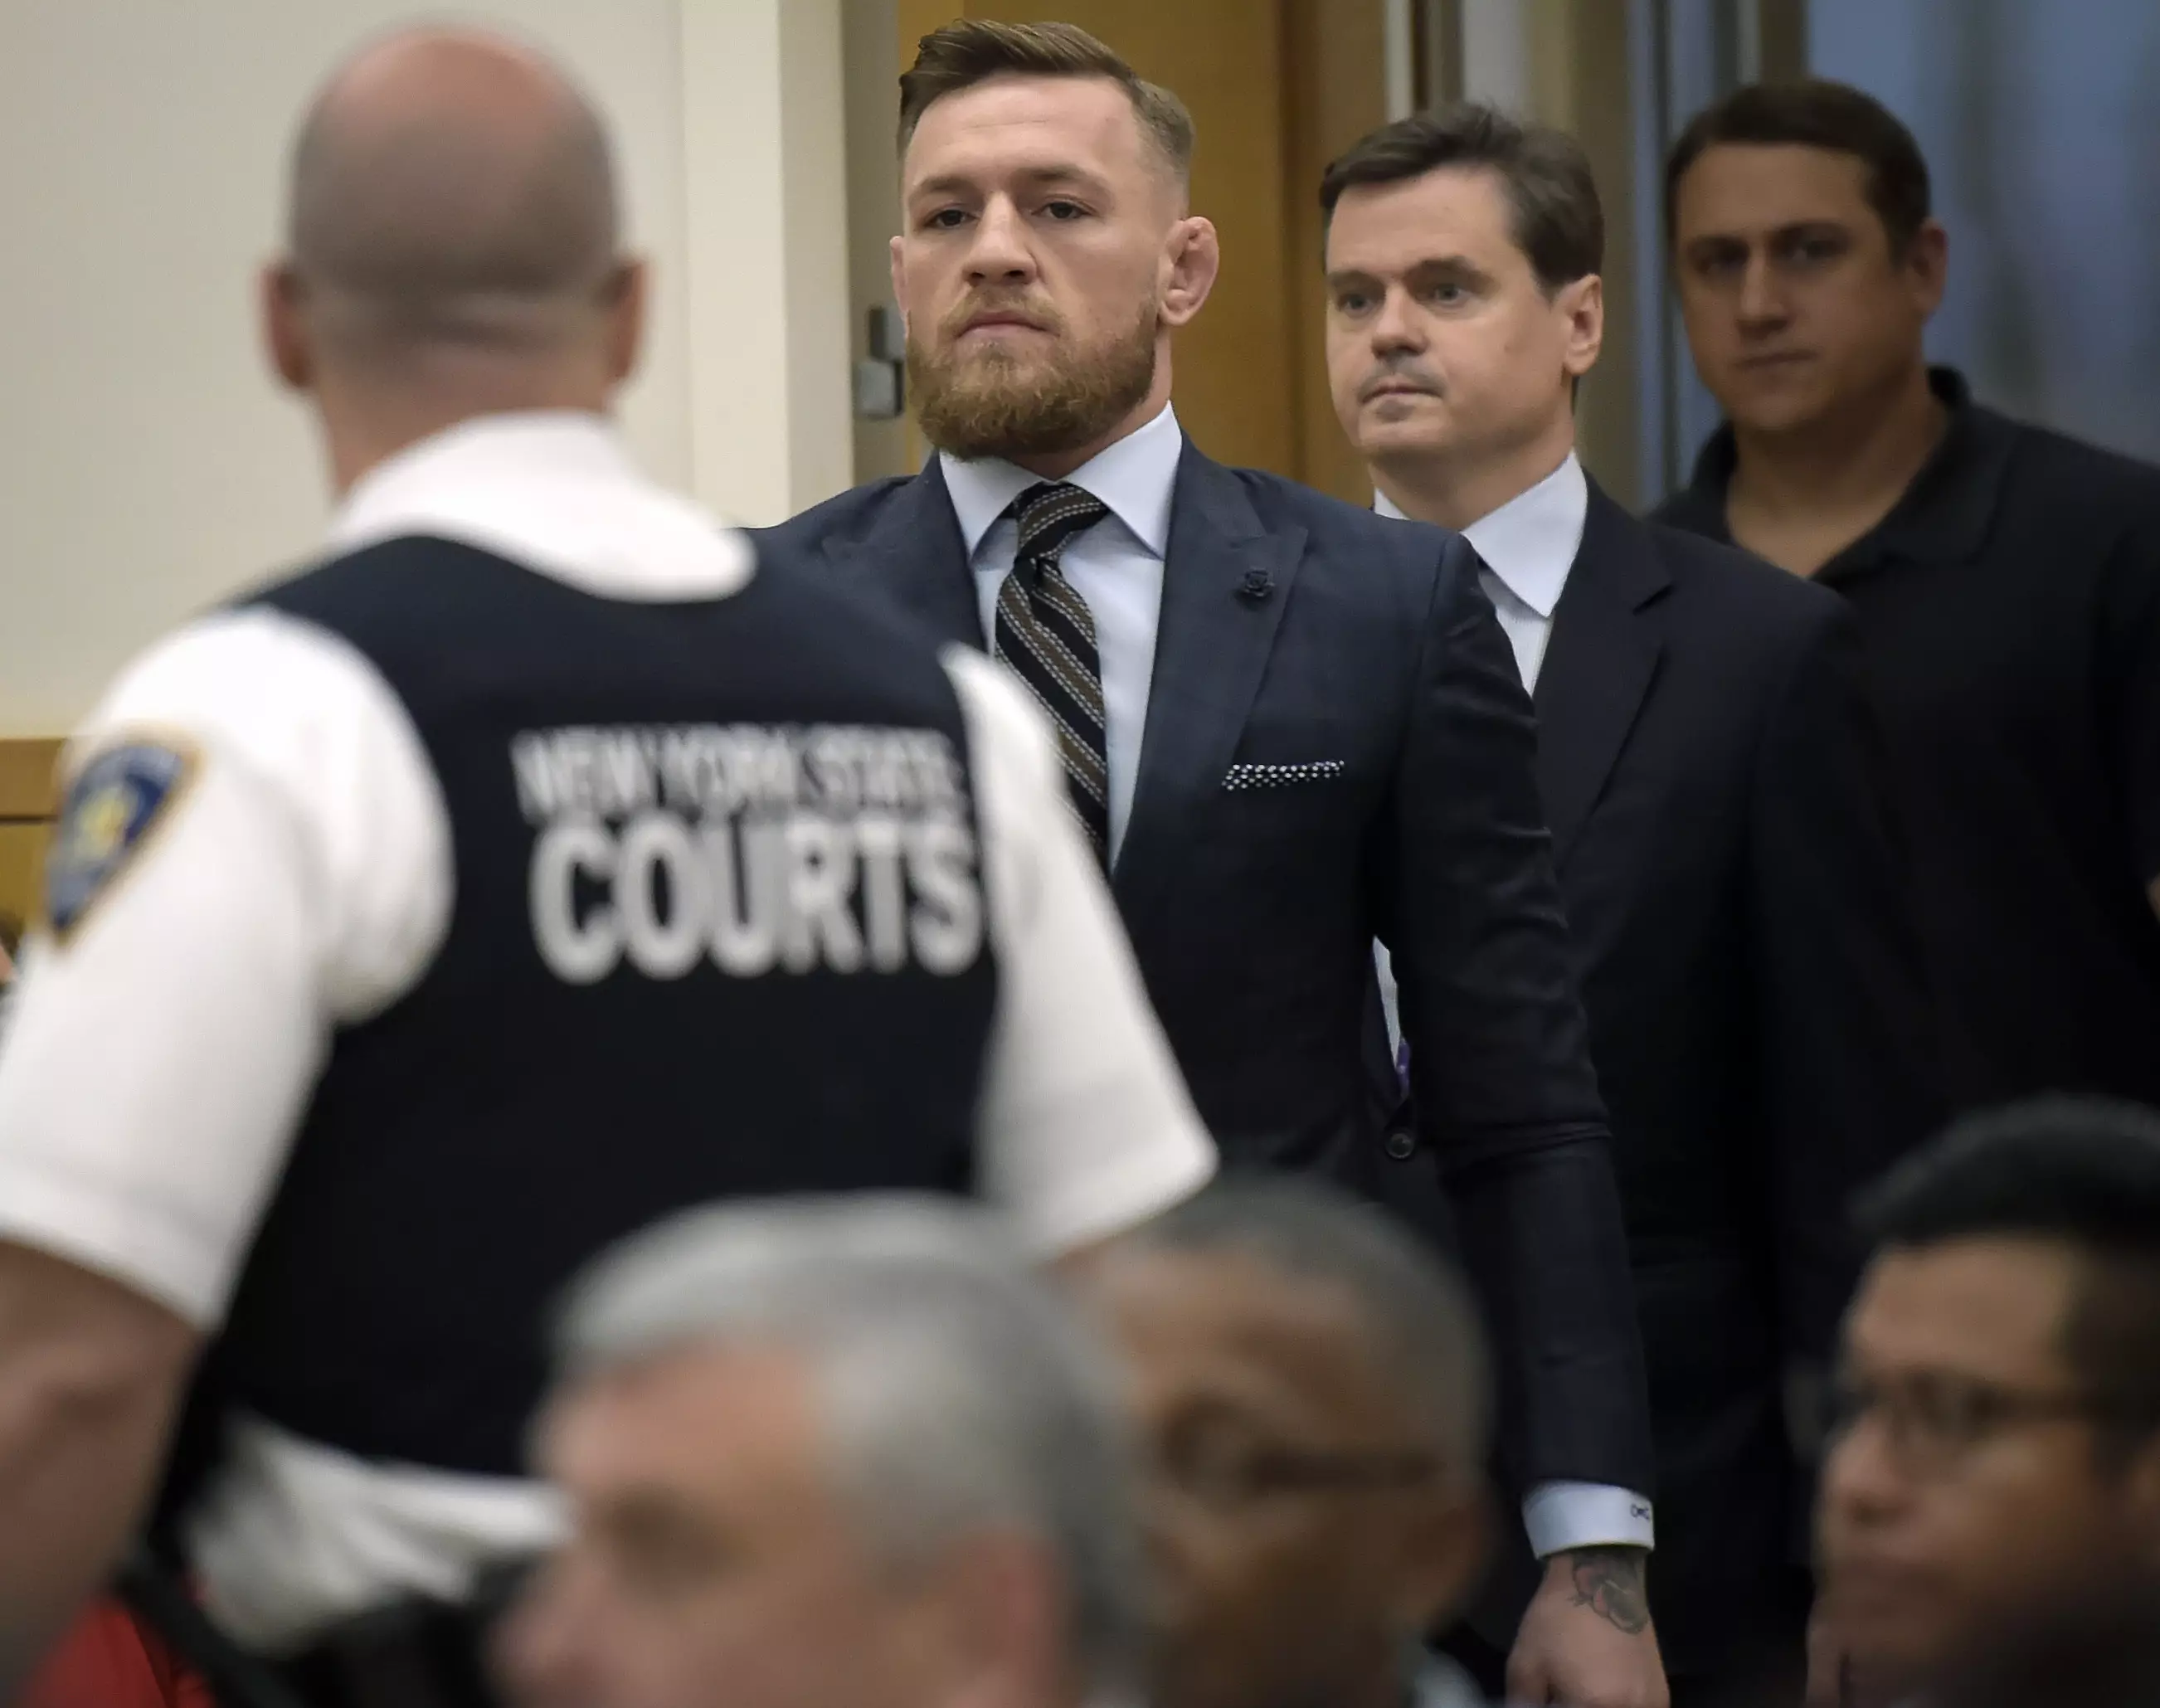 McGregor at court. Image: PA